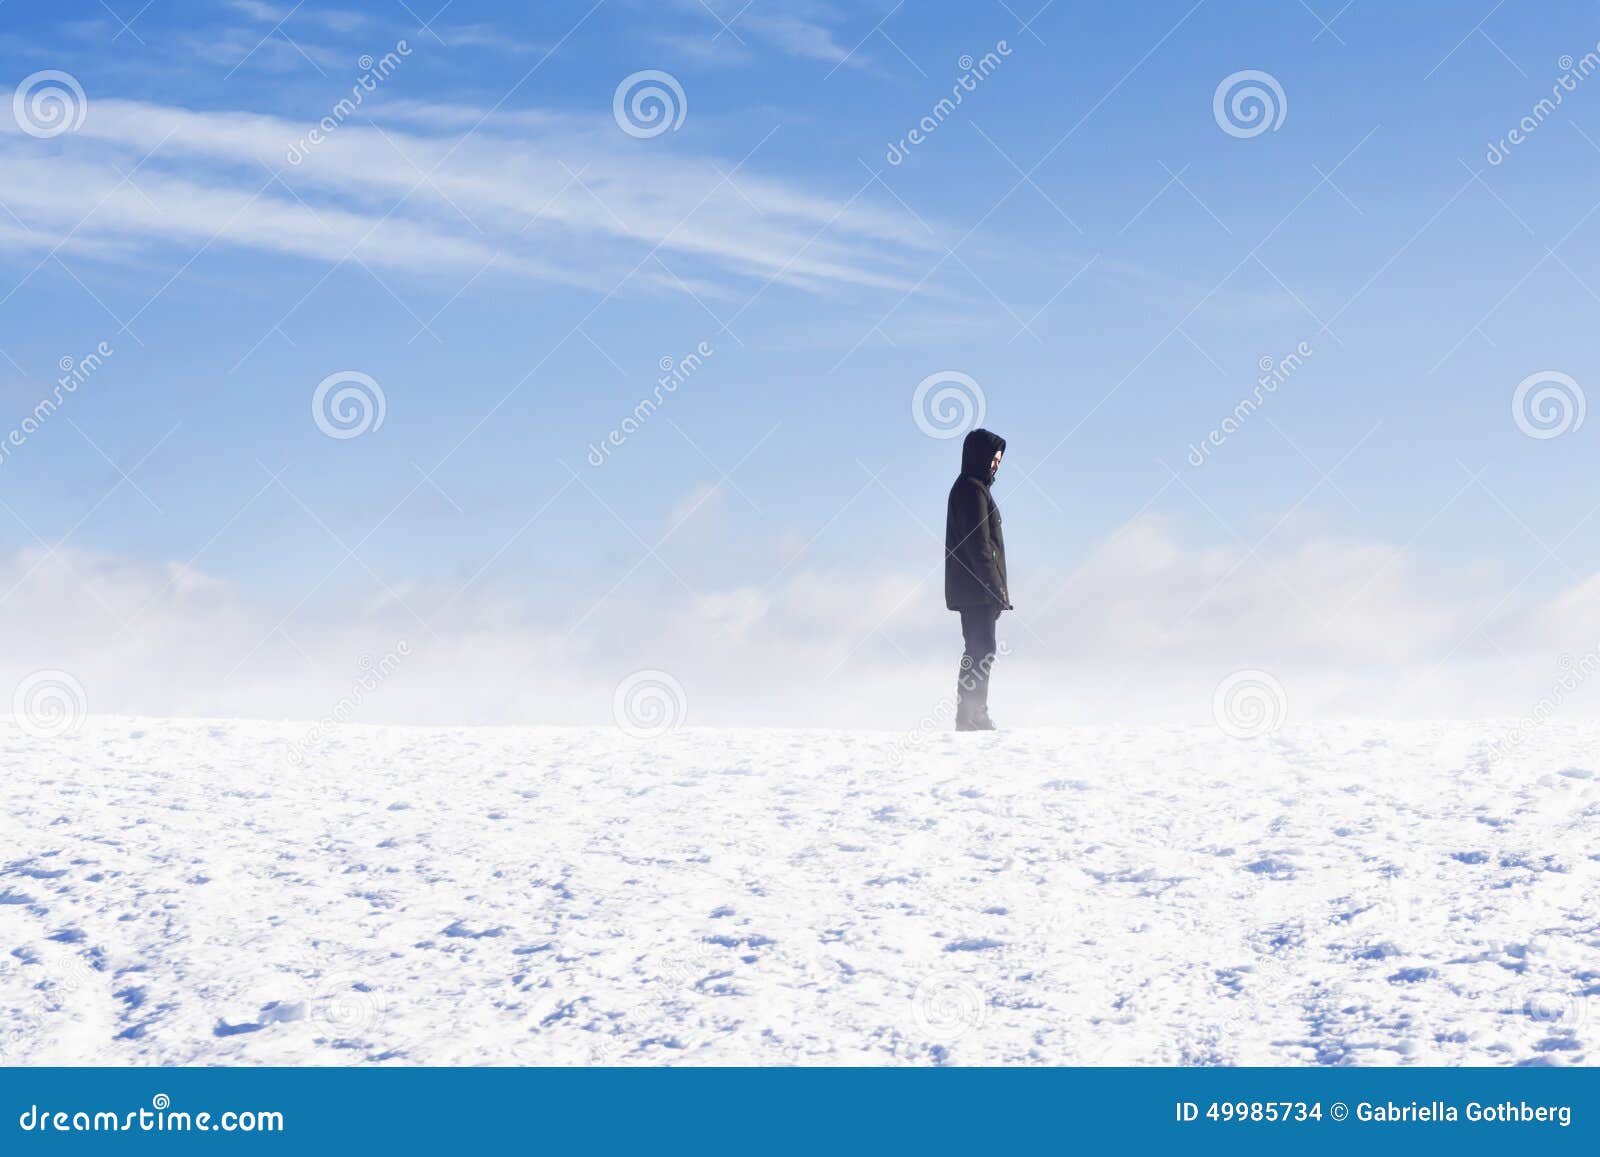 Man standing in snow flurry against blue sky. Man standing on a mountain in snow flurry against blue sky.